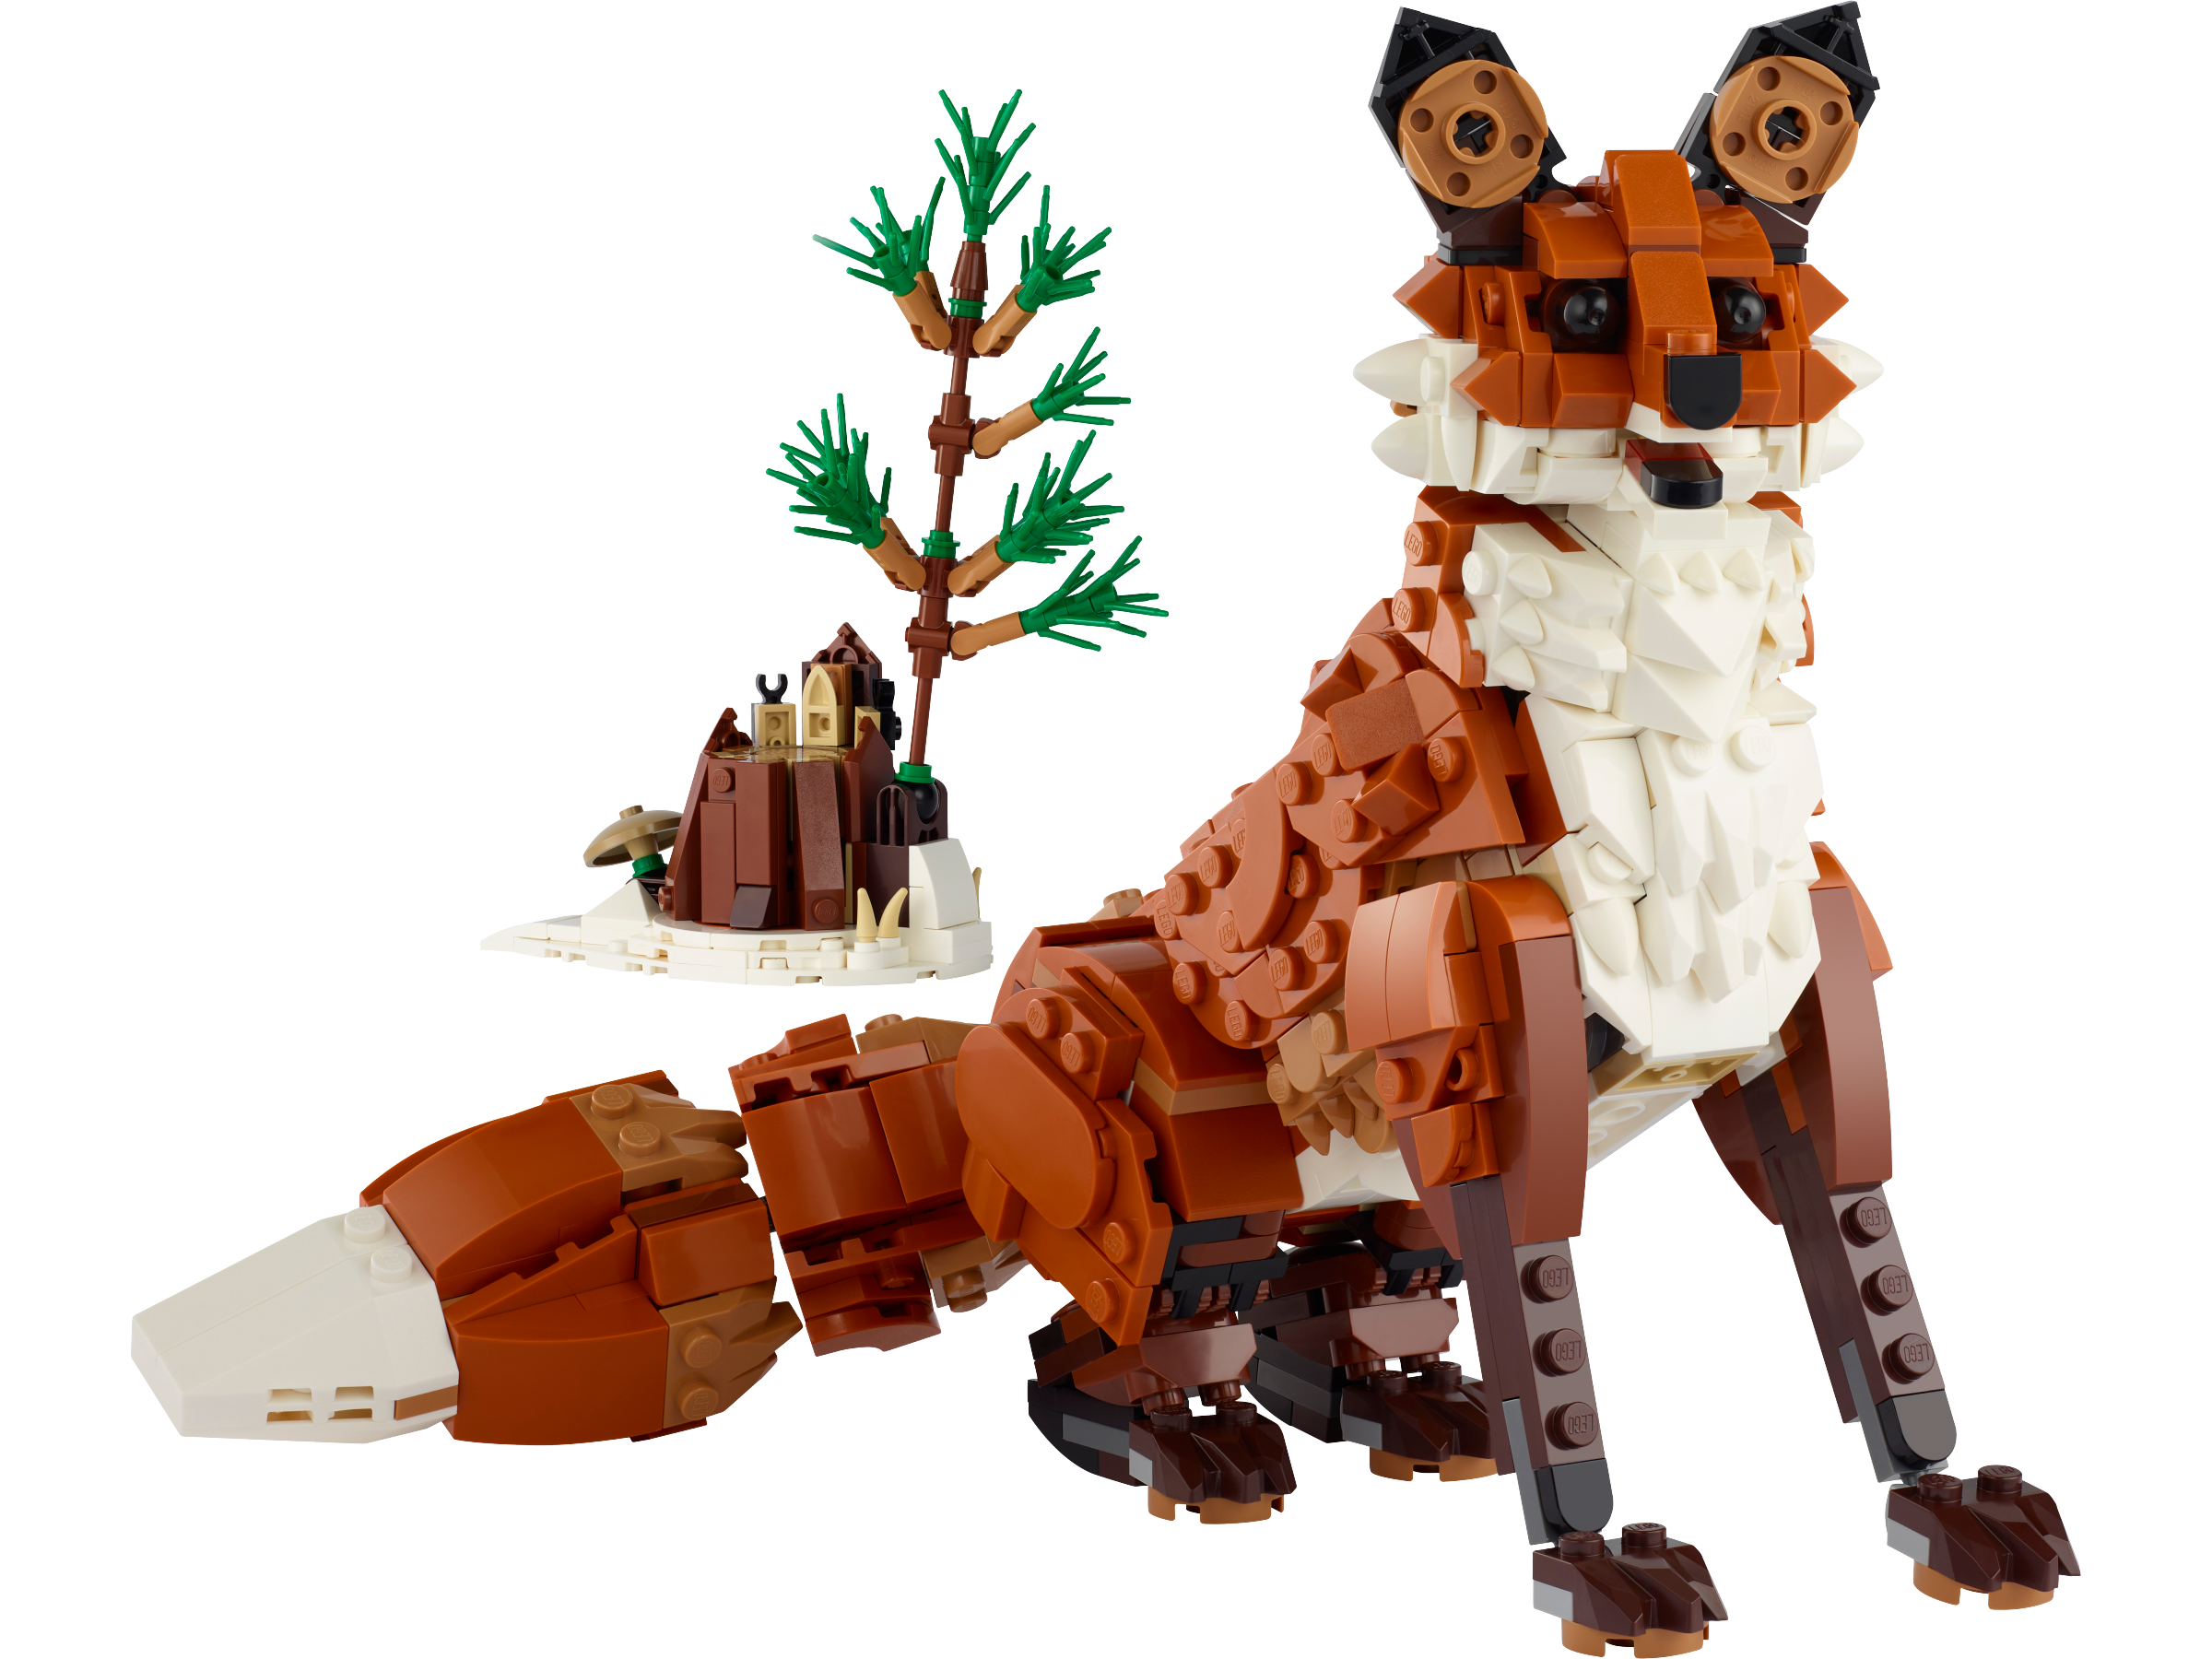 Fox Toy, Wildlife Animal Toys